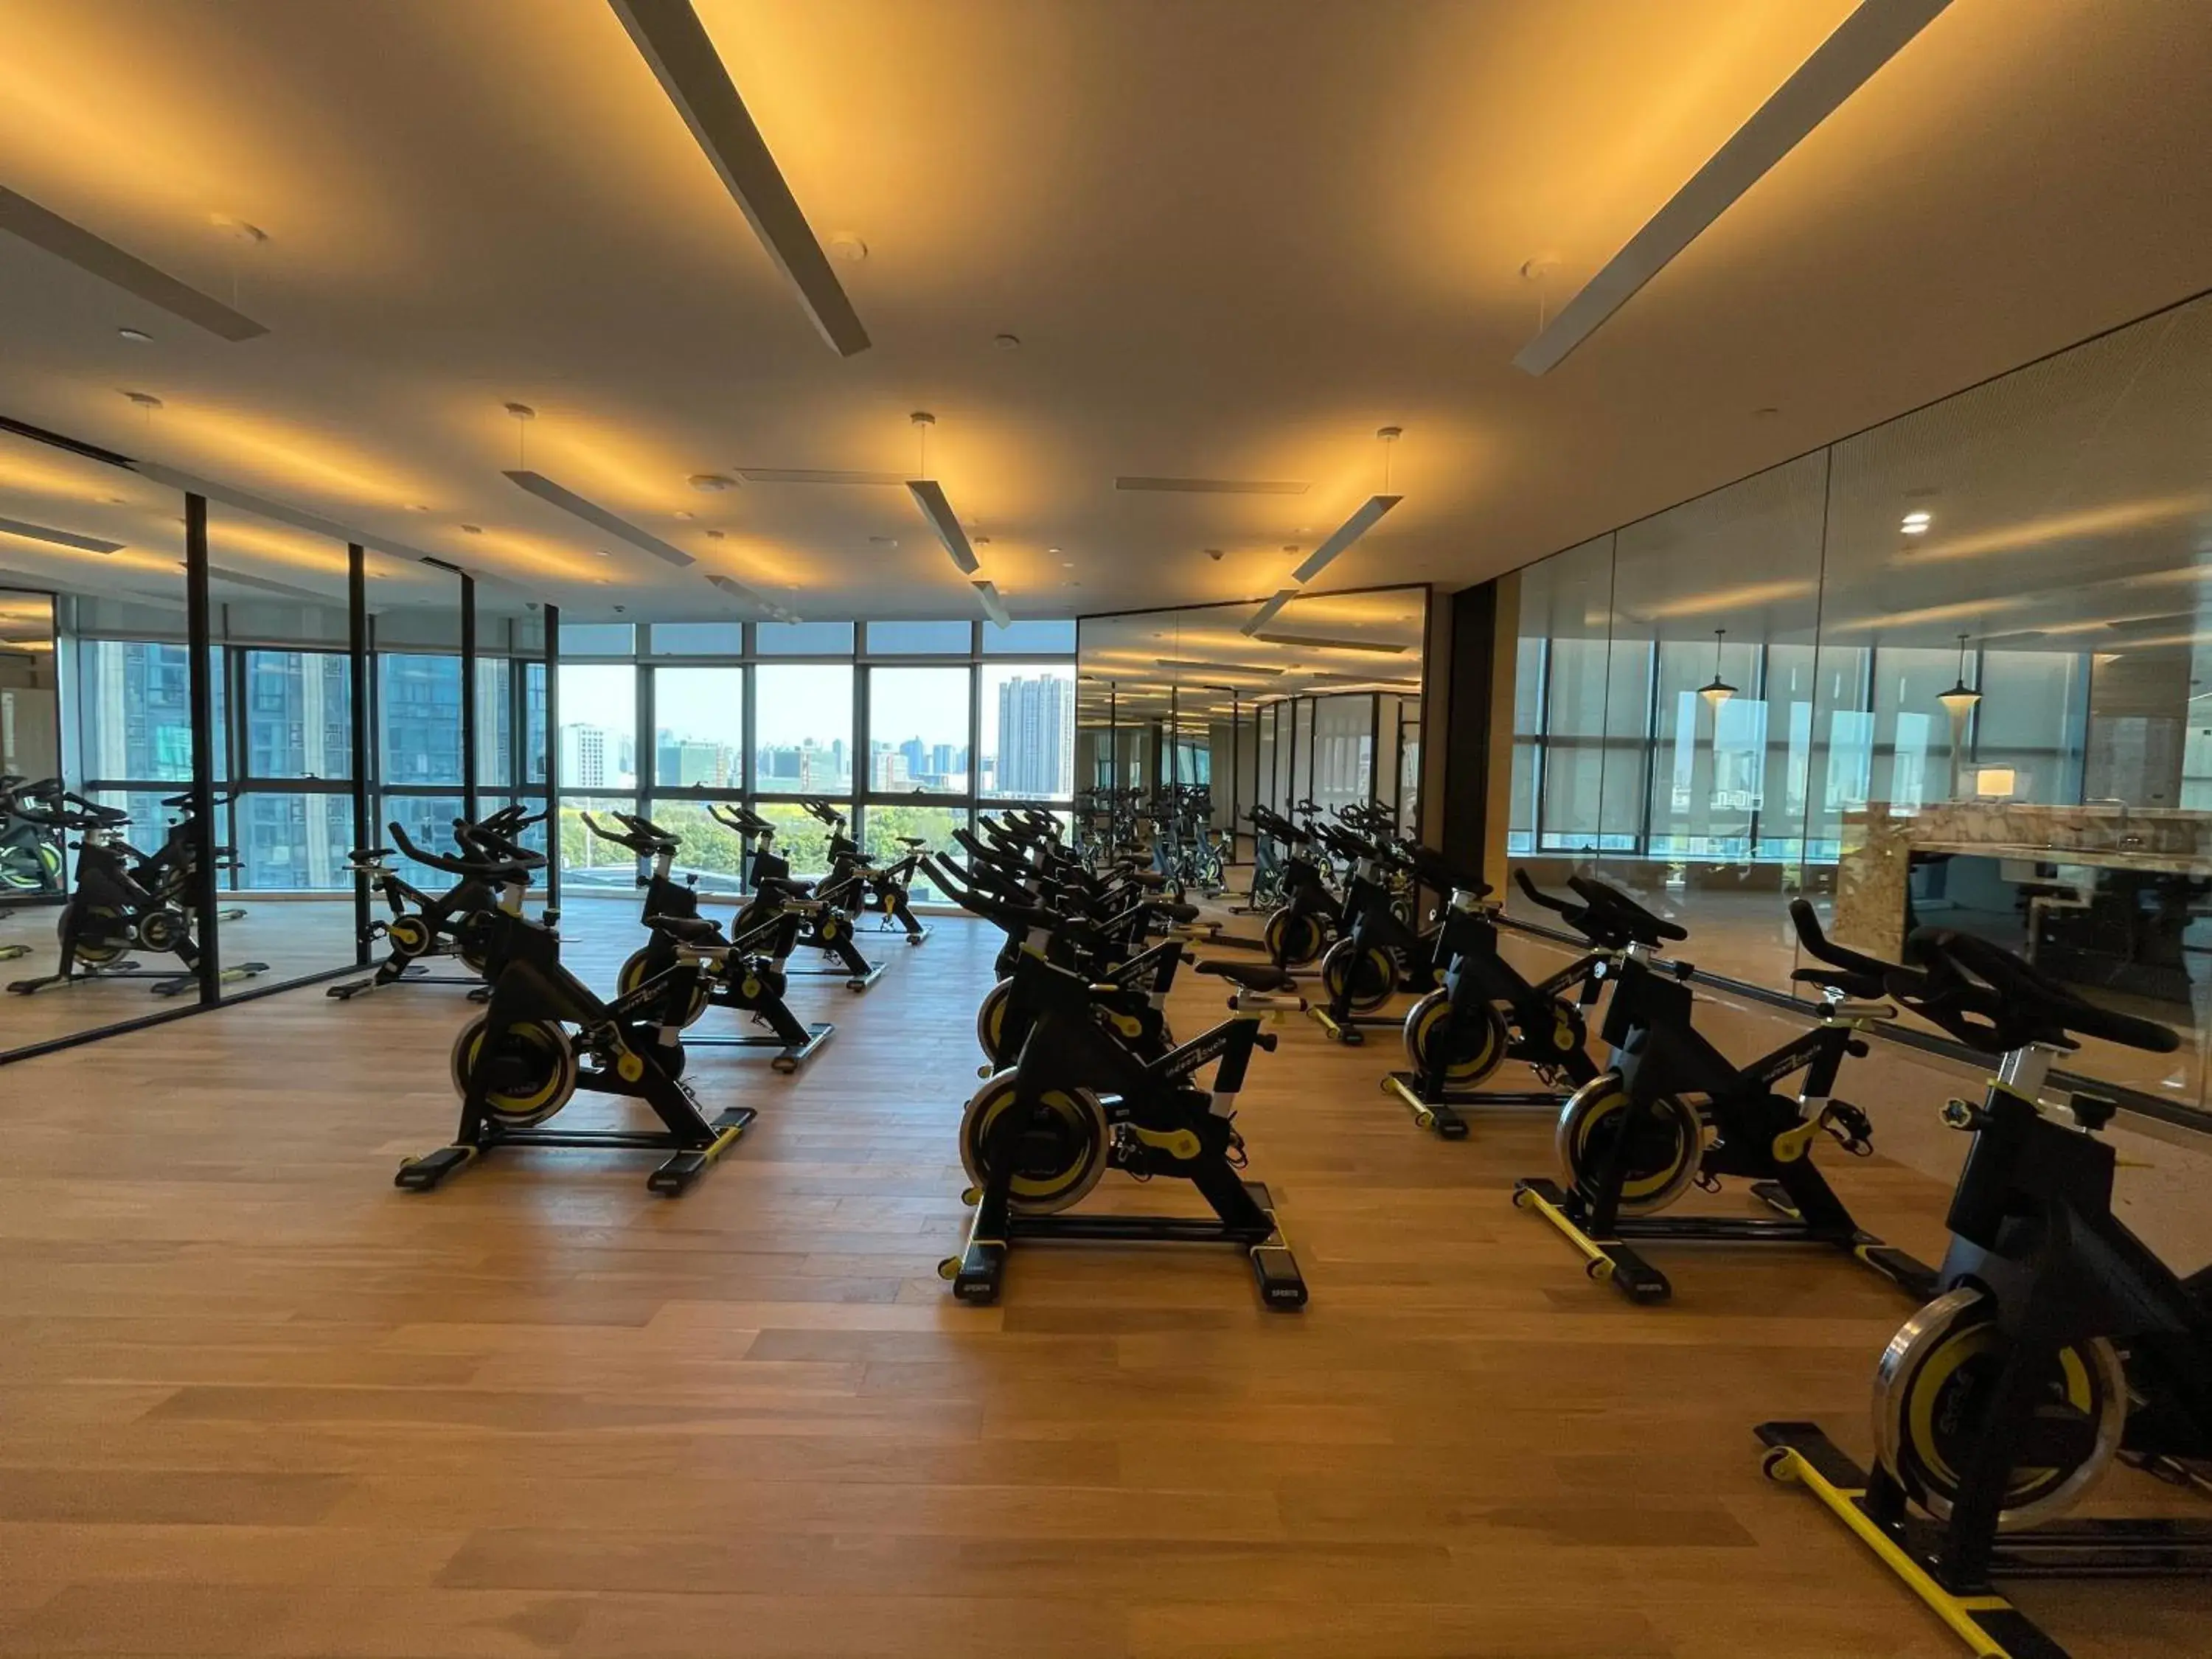 Fitness centre/facilities, Fitness Center/Facilities in Sofitel Hangzhou Yingguan